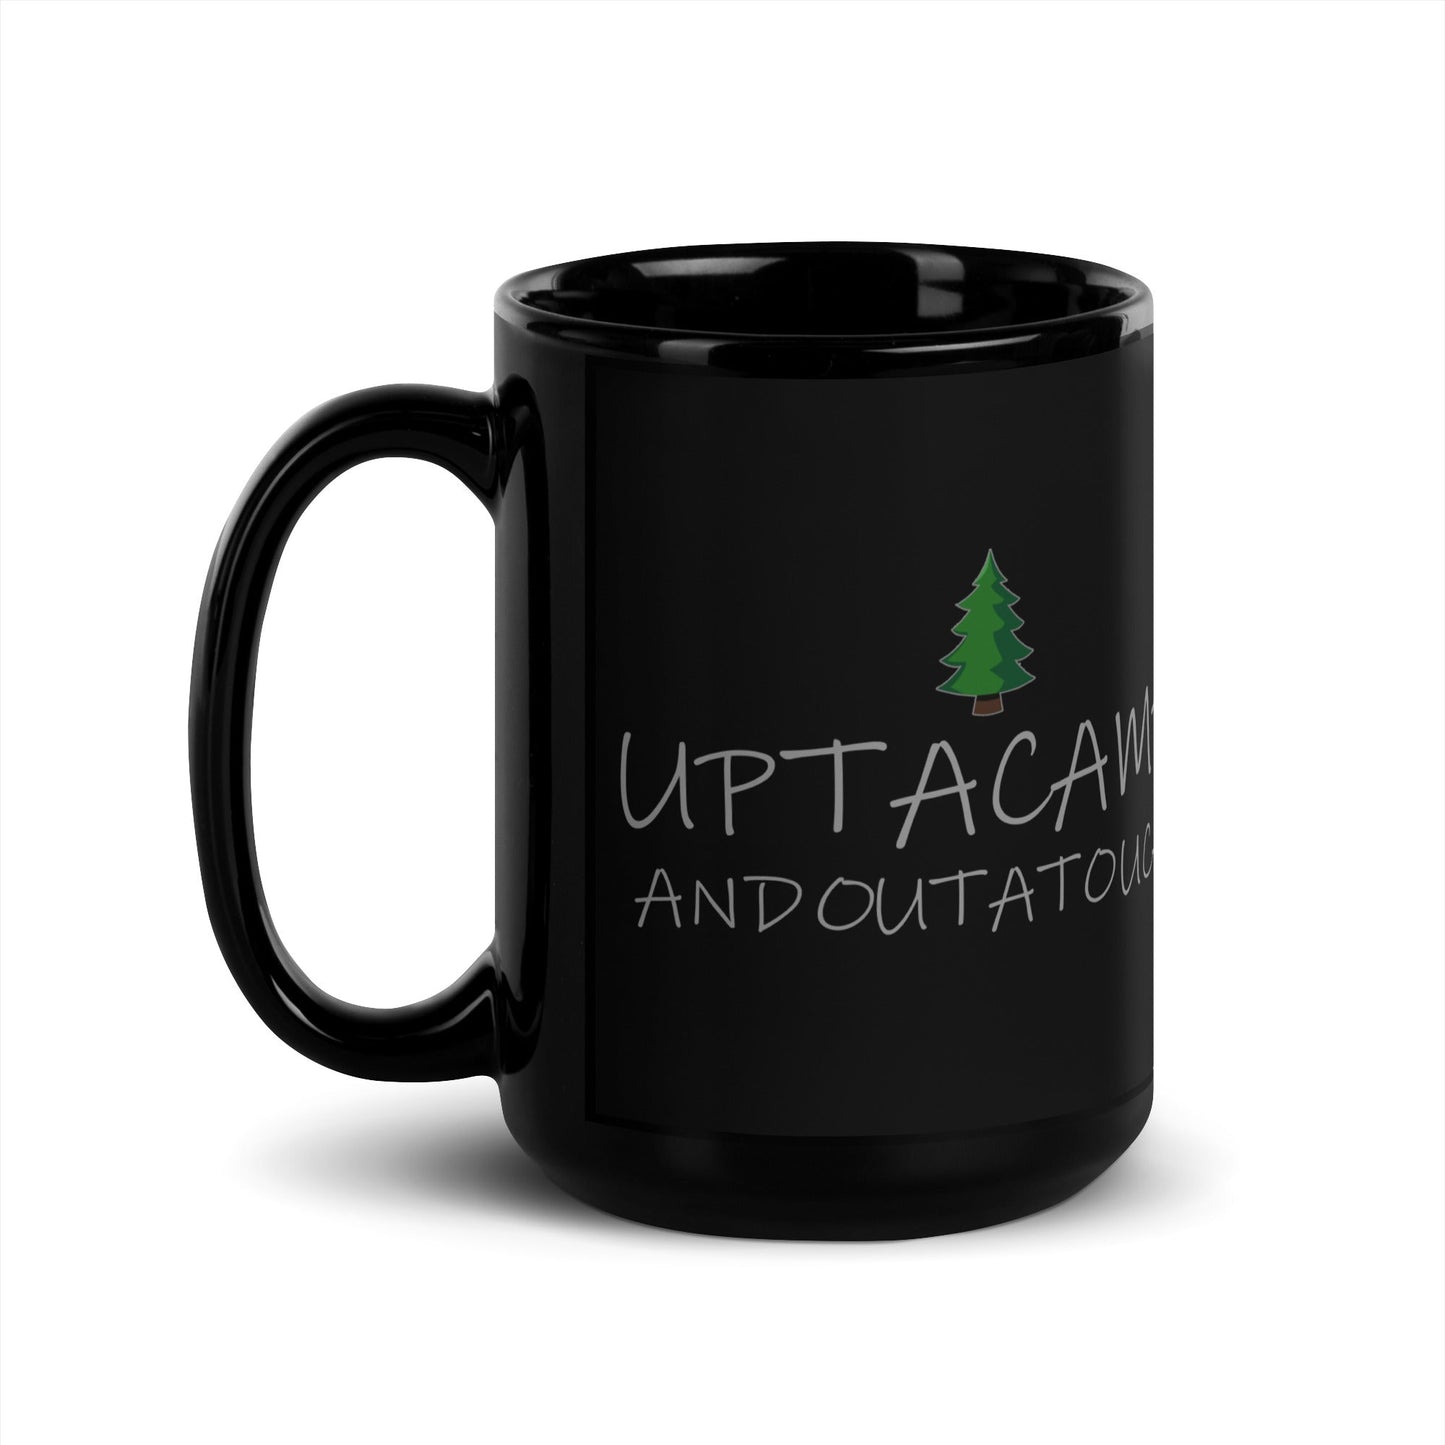 Upta Camp Outa Touch Black Glossy Ceramic Mug